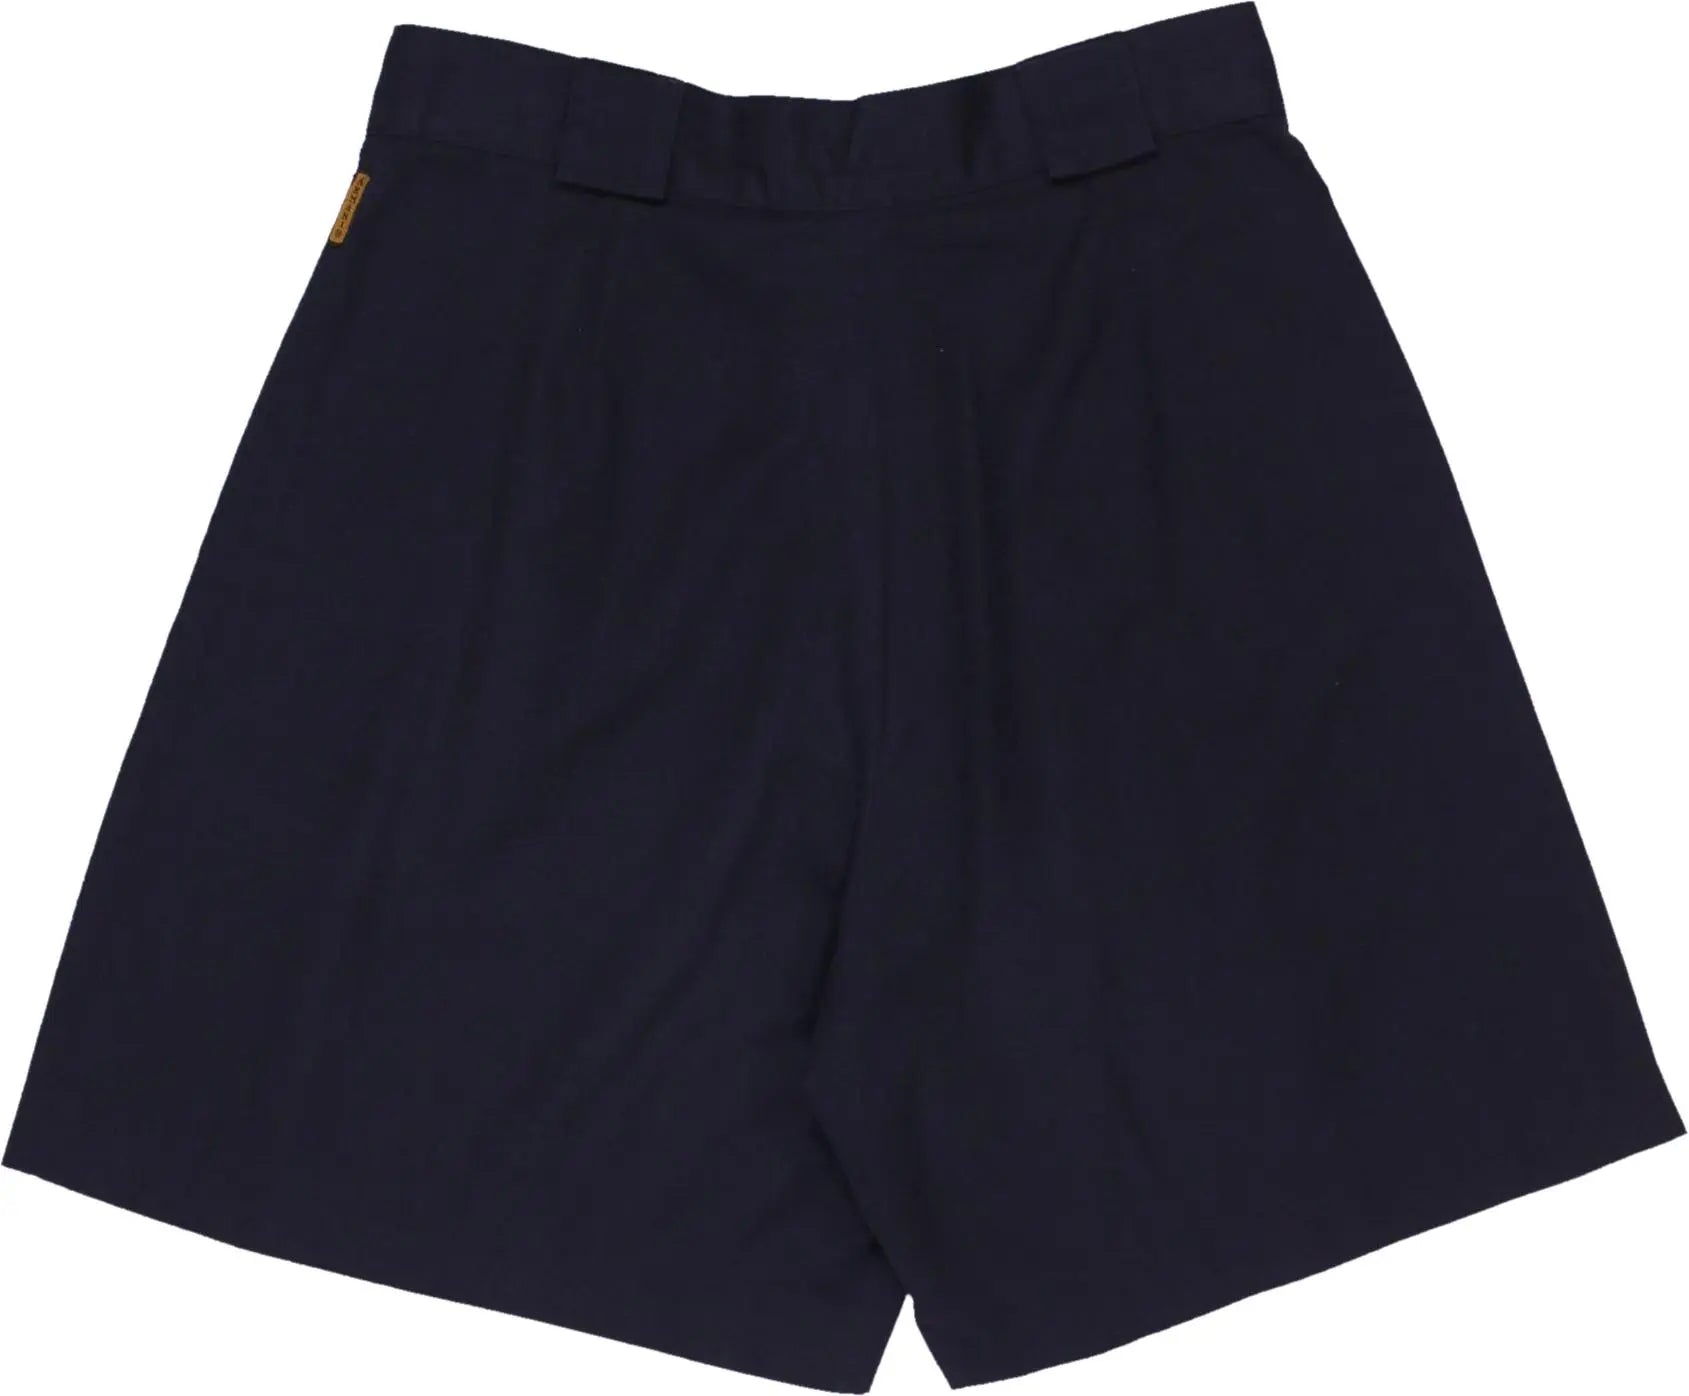 Giorgio Armani - Shorts by Giorgio Armani- ThriftTale.com - Vintage and second handclothing